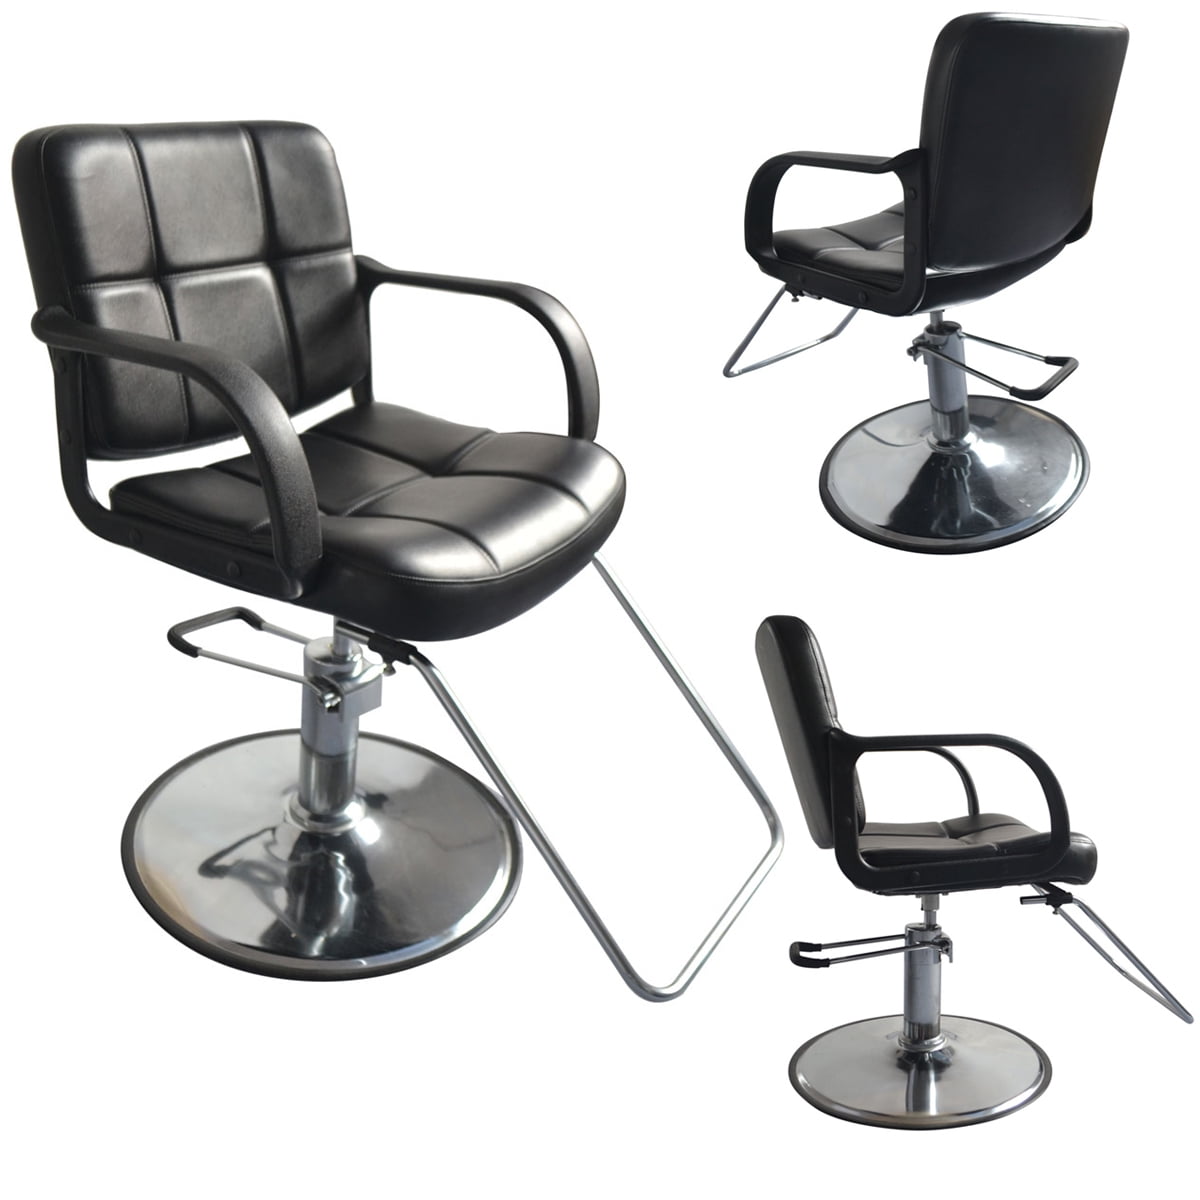 Heberry Leisure Swivel Chair Casual Lift Chair Office Work Chair Beauty Salon Chair Black 